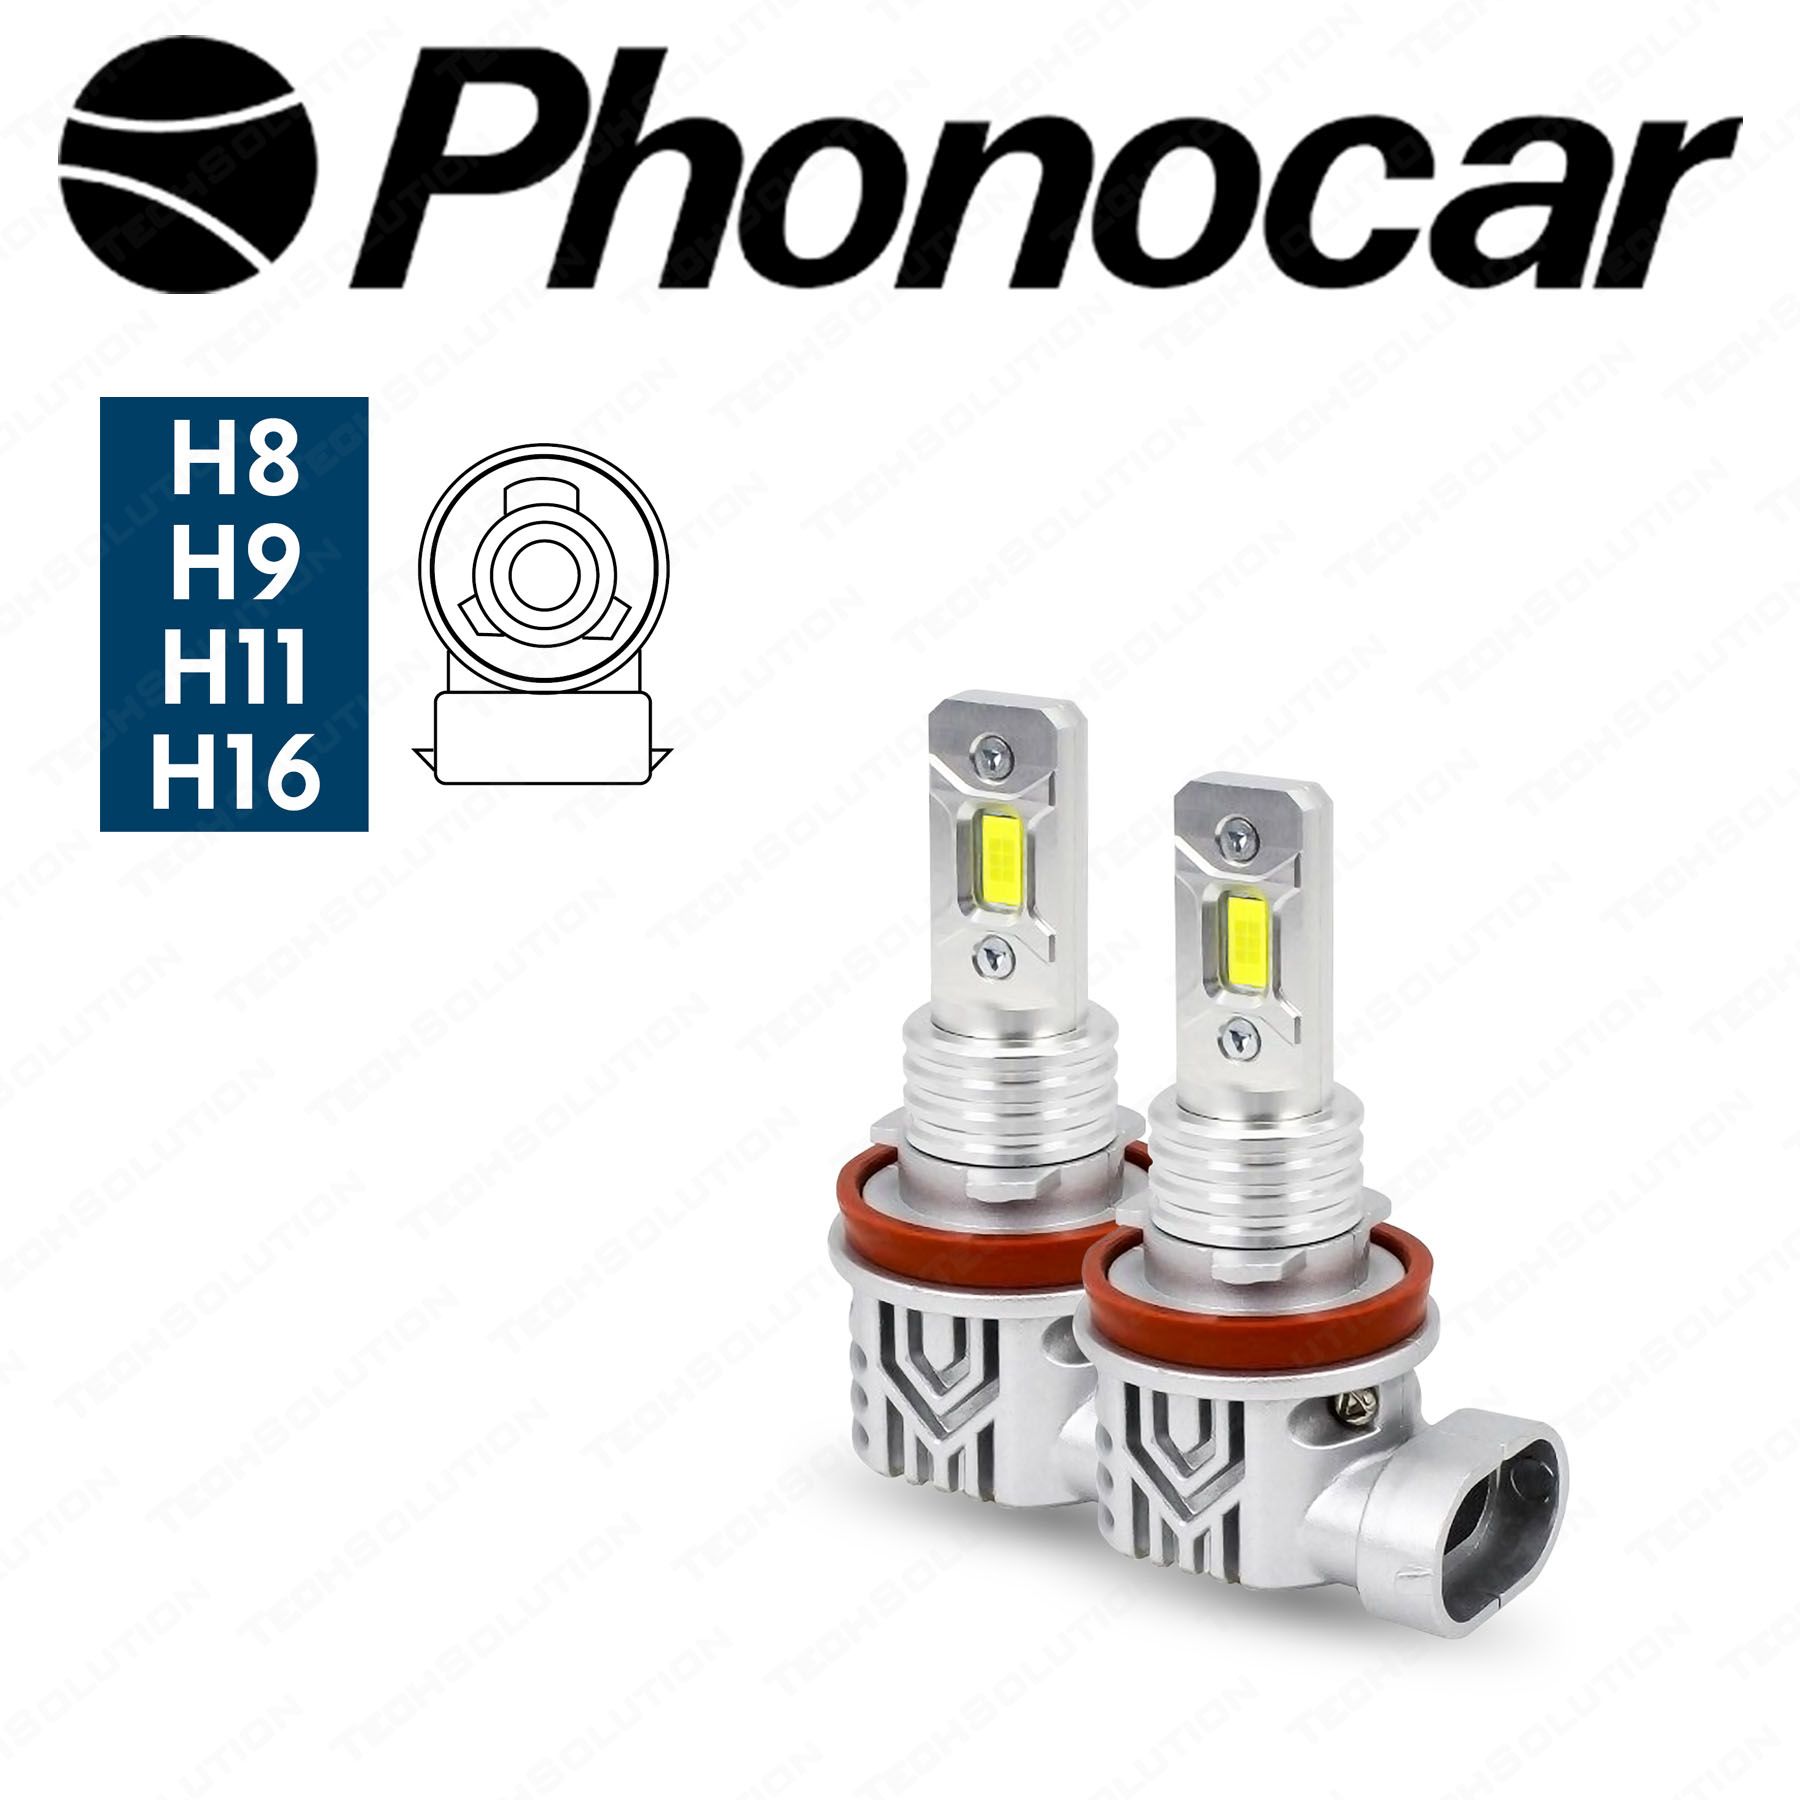 Phonocar 07554 Lampade Led H8 H9 H11 H16 Quick Change - Tech Solution